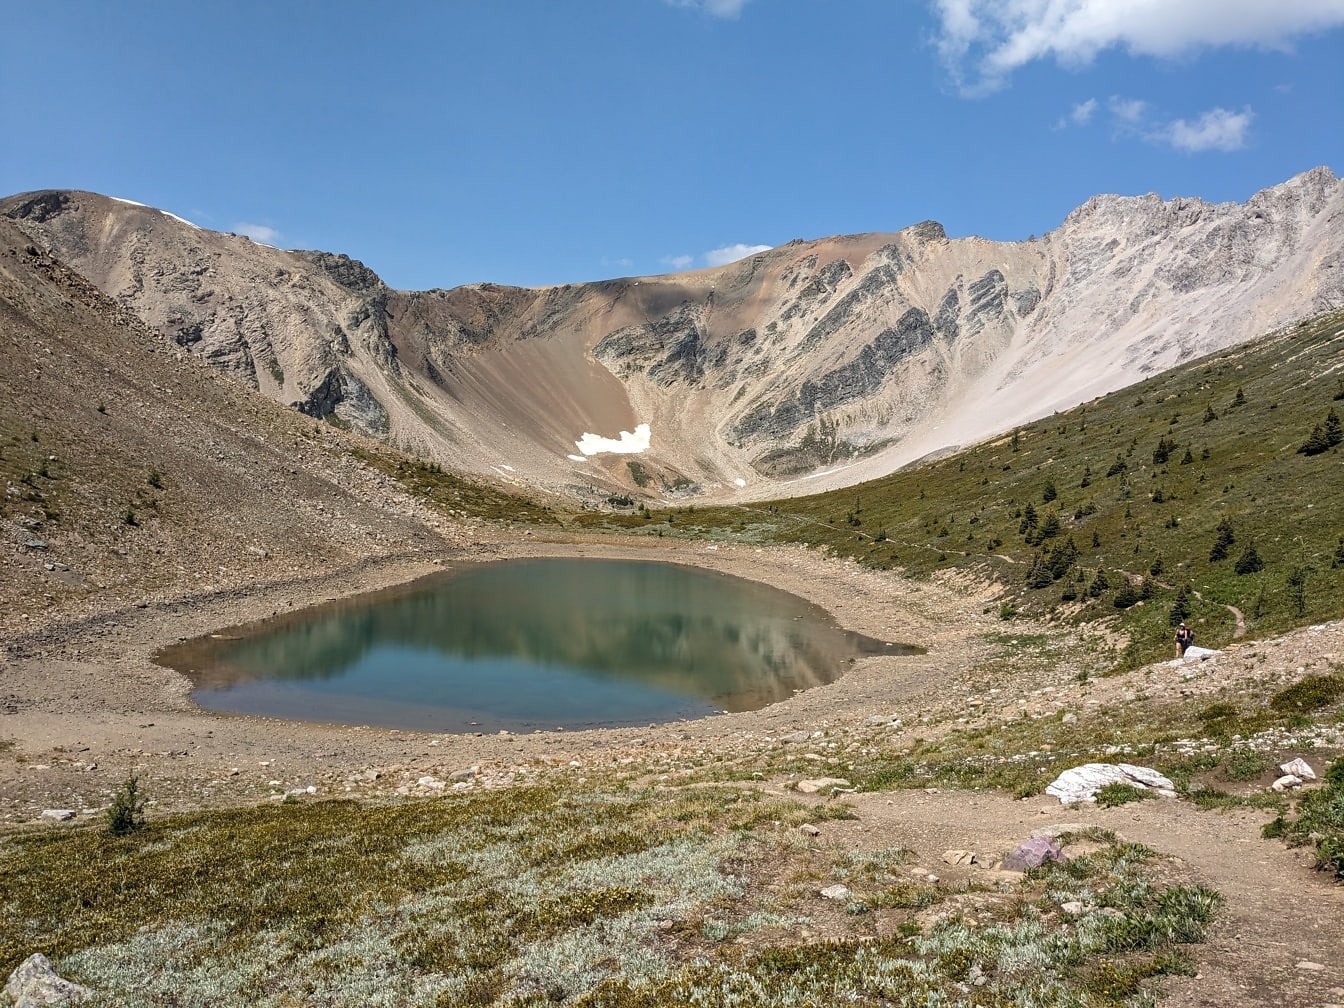 Danau kolam kecil di kawah gunung berapi Bourgeau di taman nasional